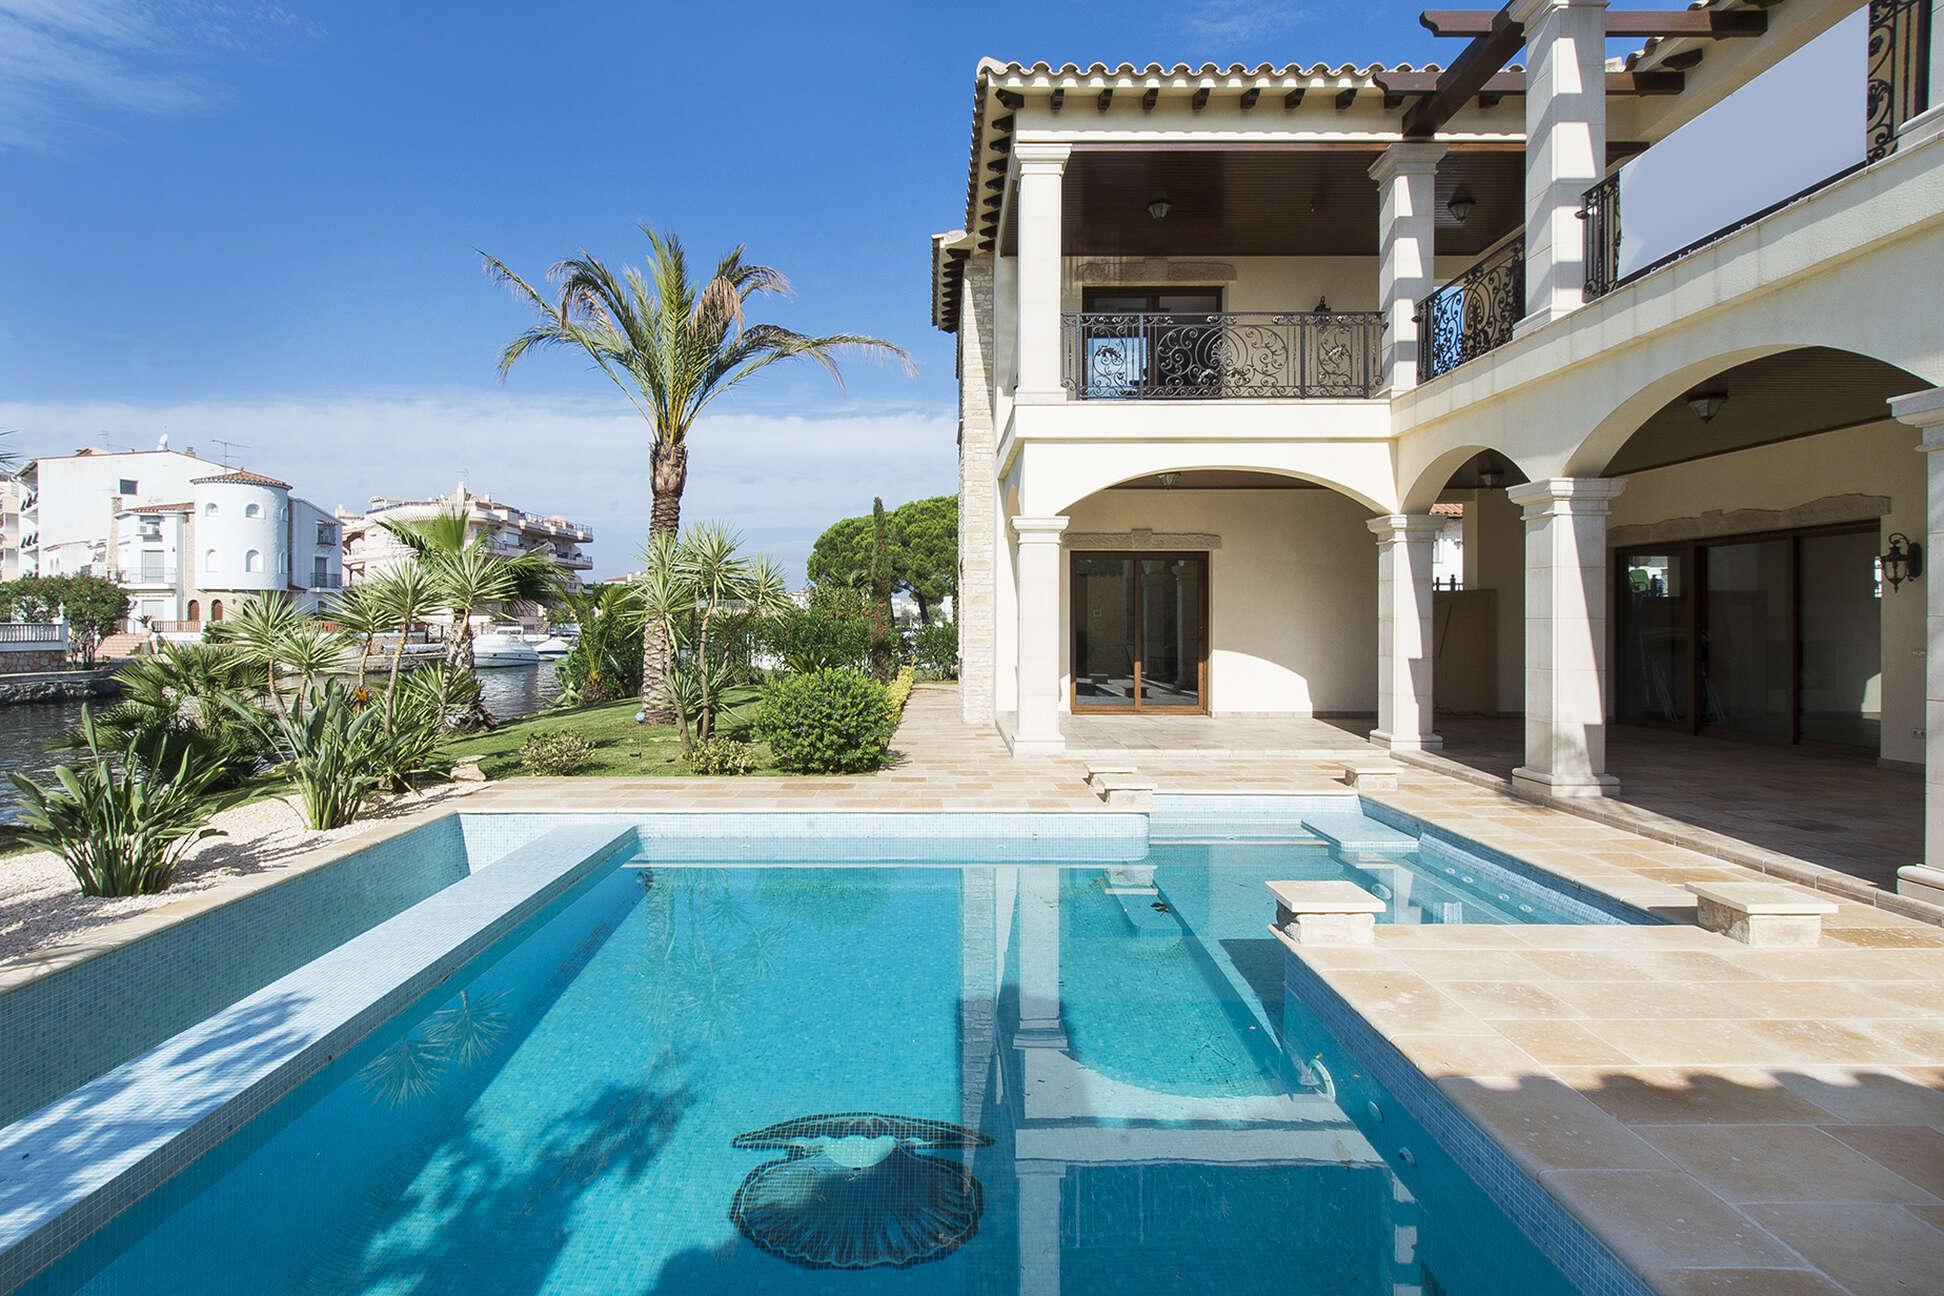 villa-maison-canal-amarrage-27metres-luxe-piscine-vendre-empuriabrava-334